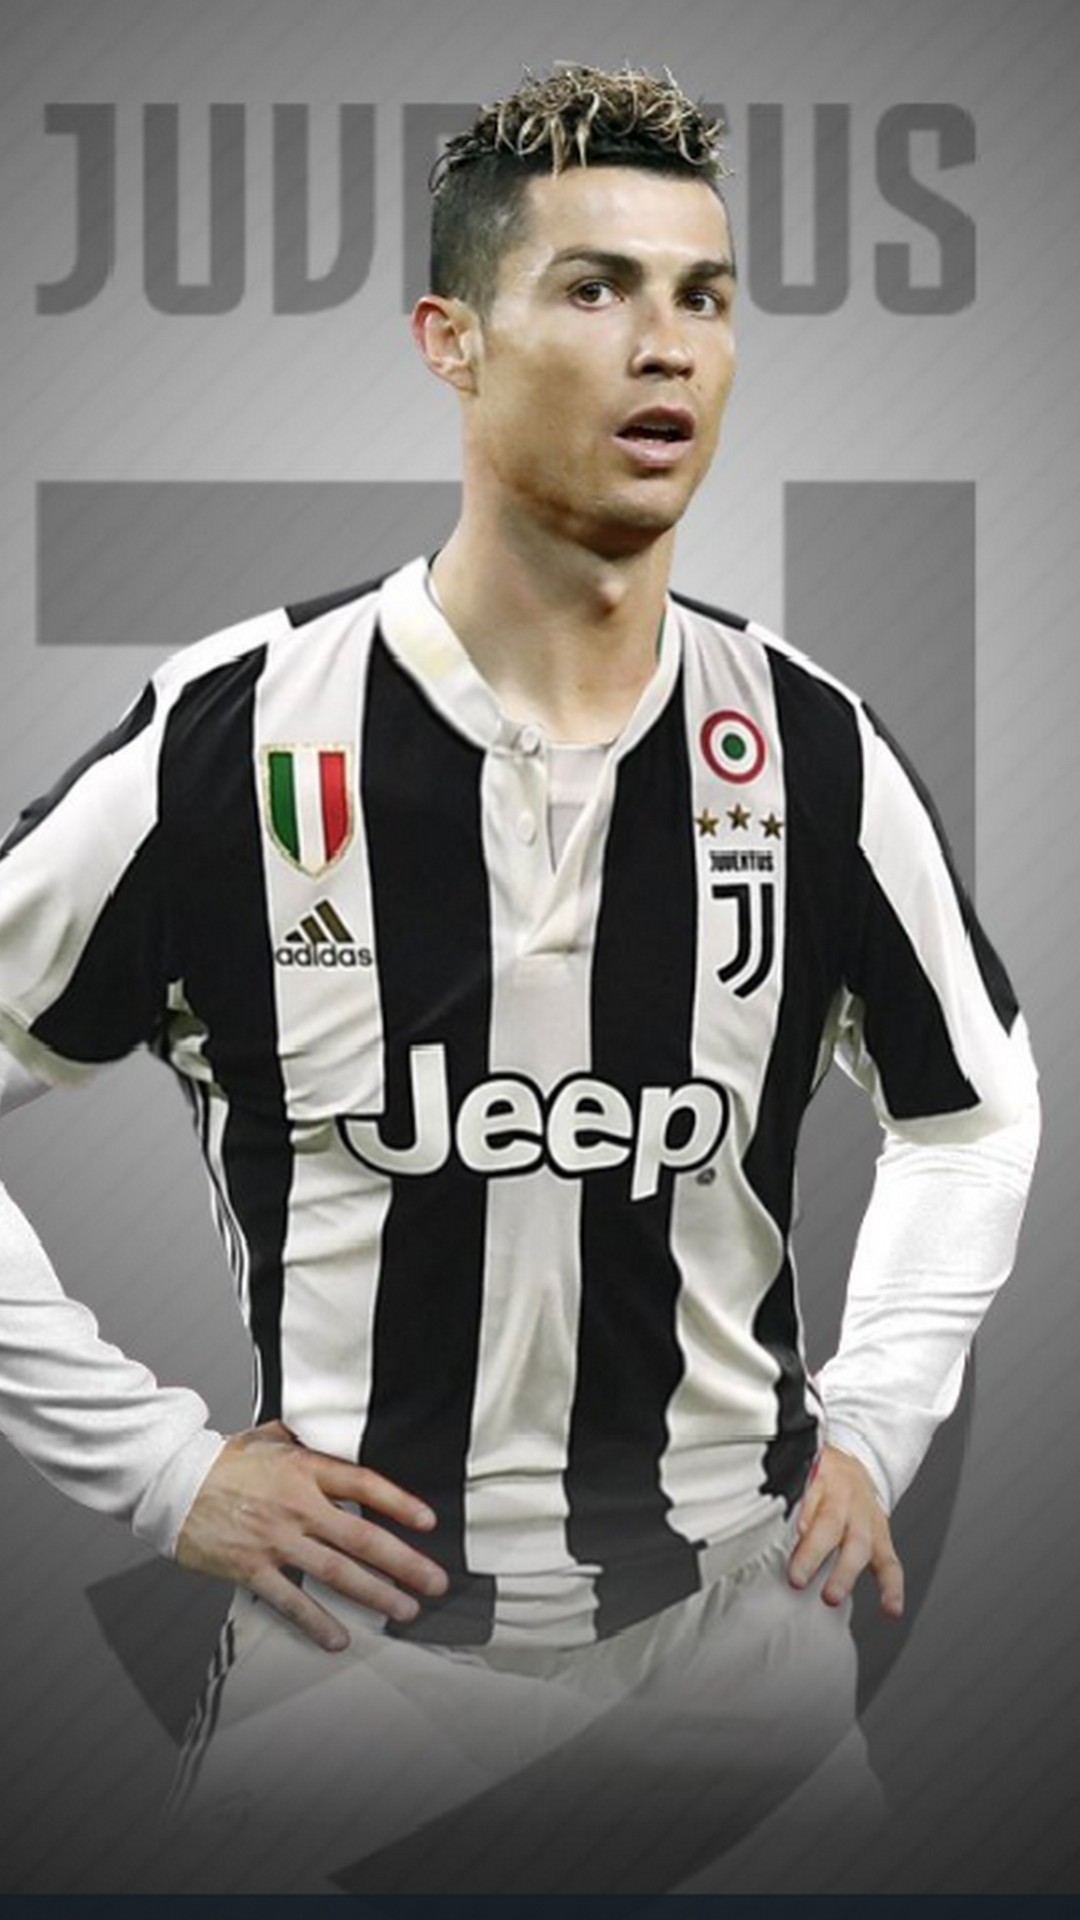 Wallpaper Cristiano Ronaldo Juventus Android Android Wallpapers